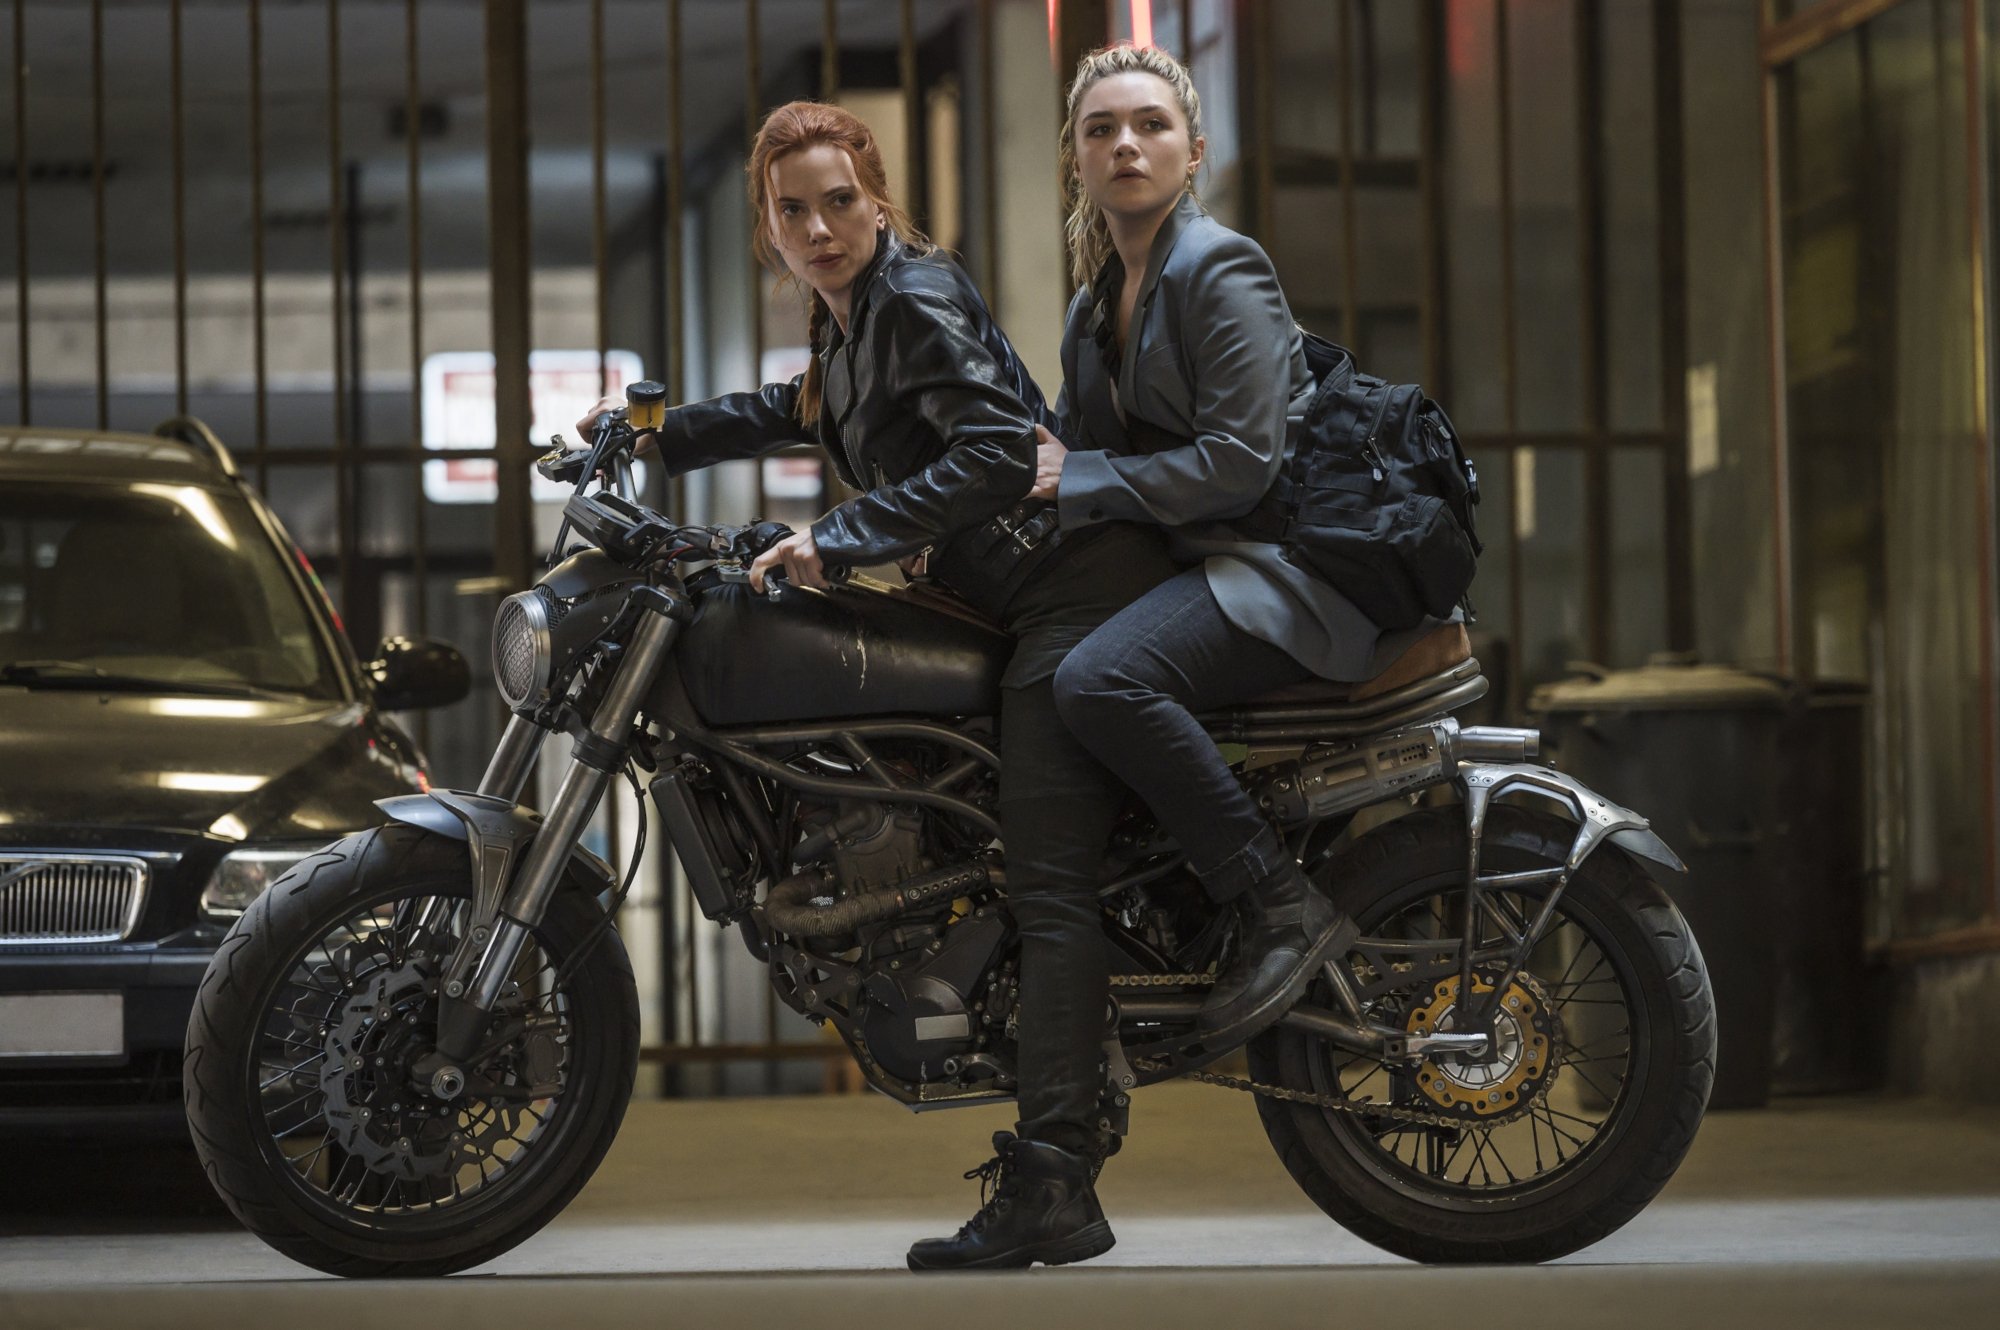 Natasha Romanoff (L) and Yelena Belova riding a motorcycle in 'Black Widow'